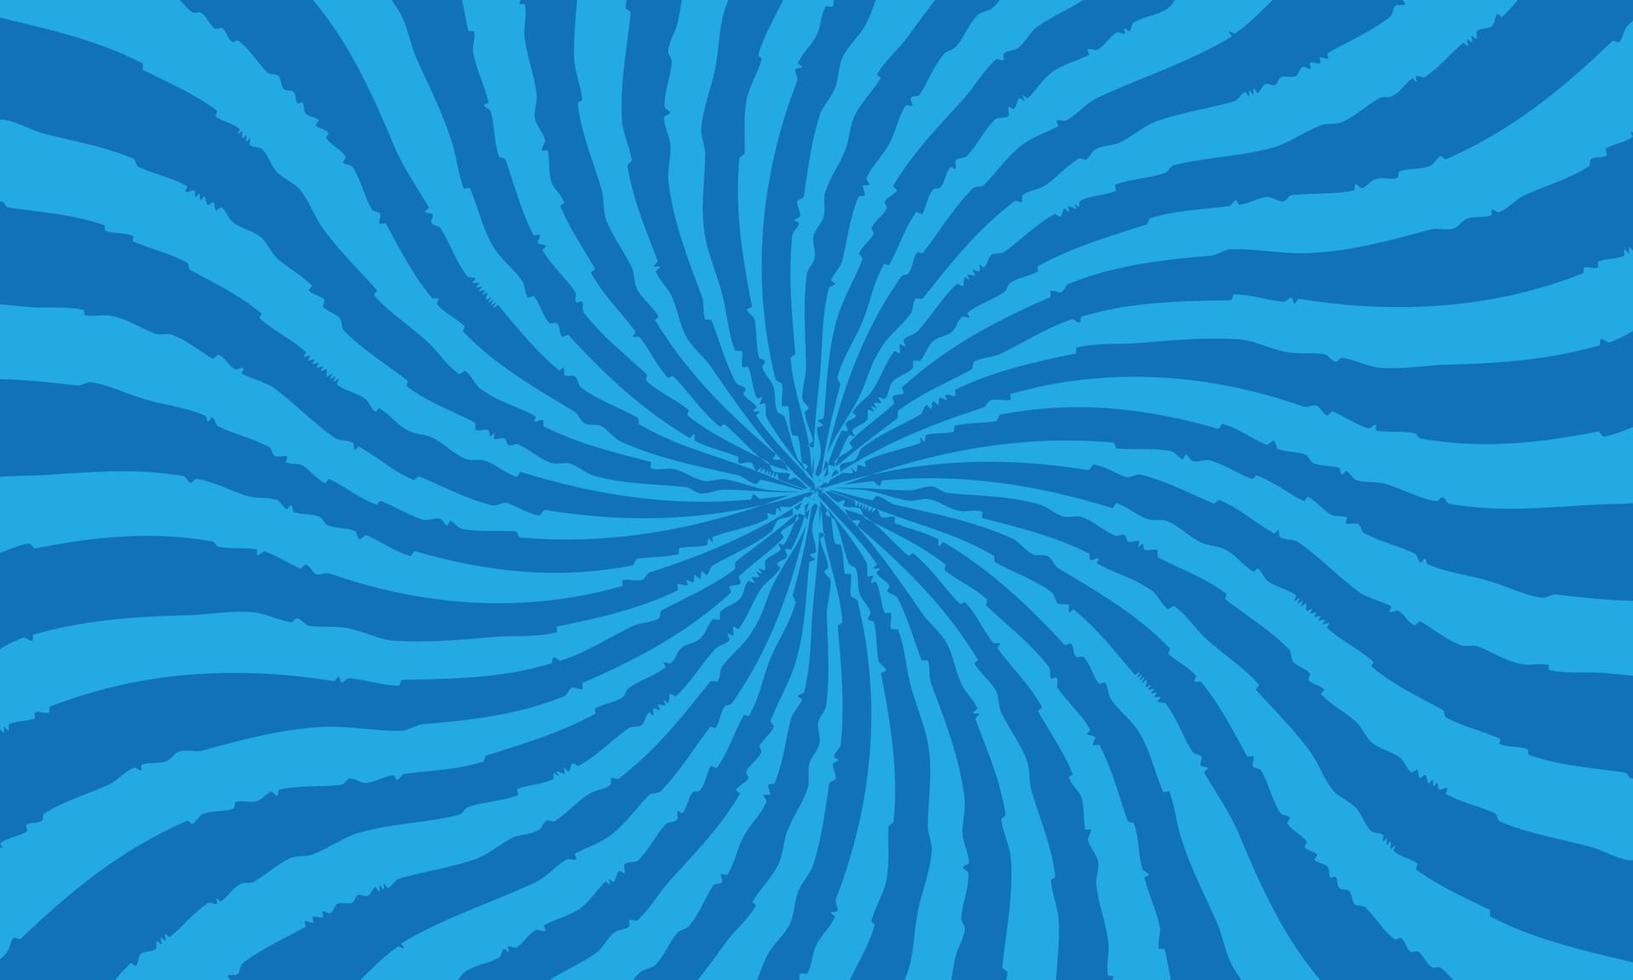 abstract sun burst blue background vector